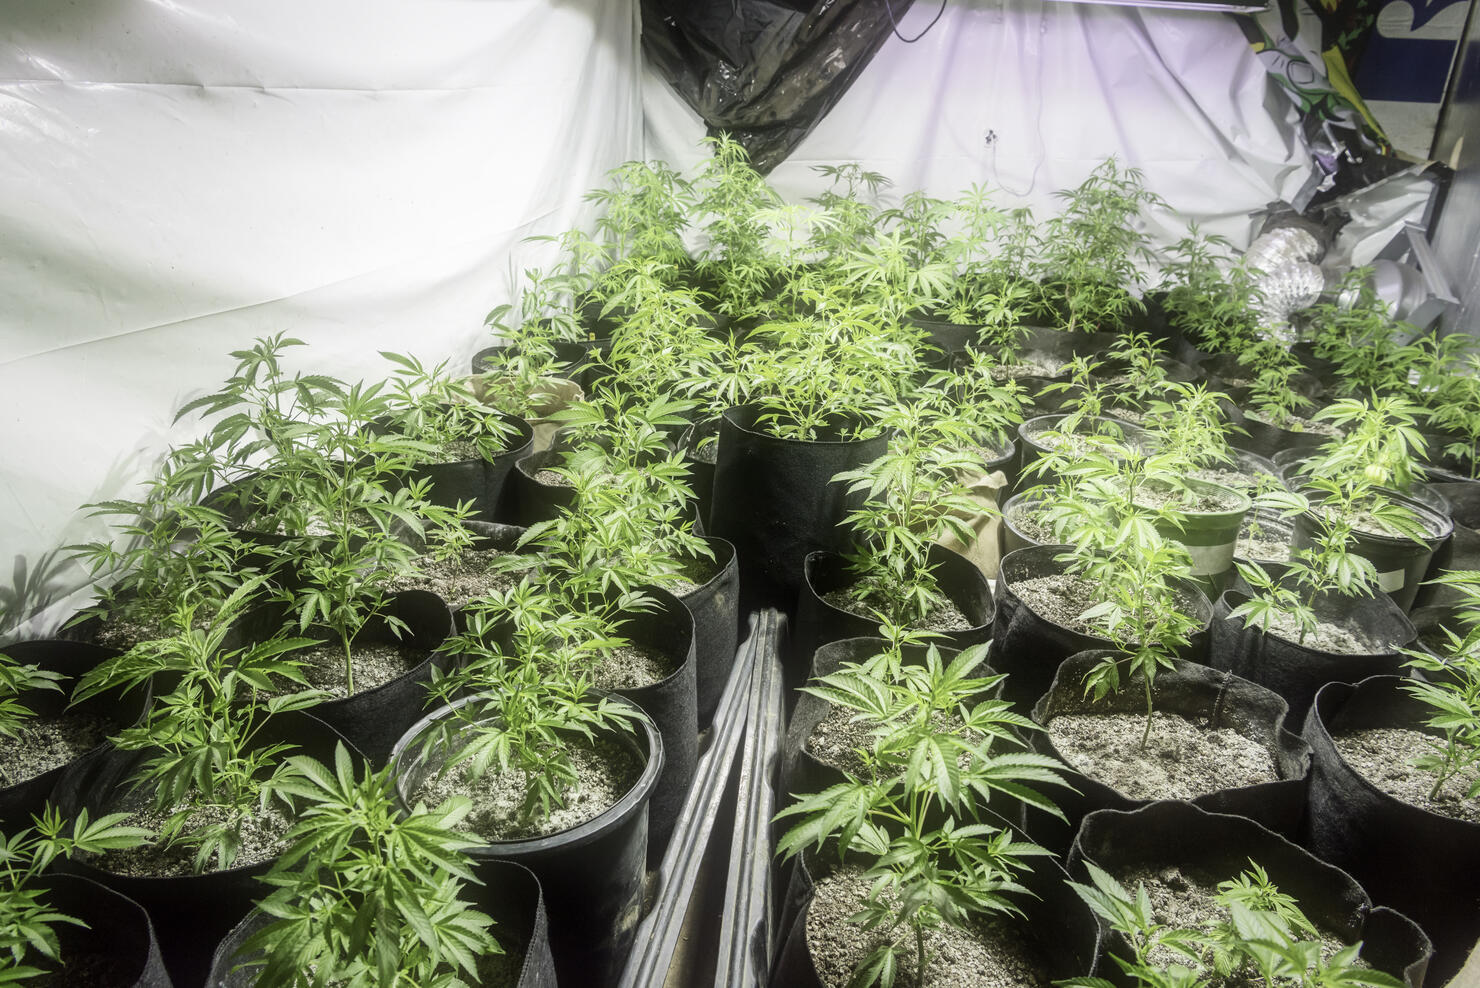 Growing organic marijuana in a garage